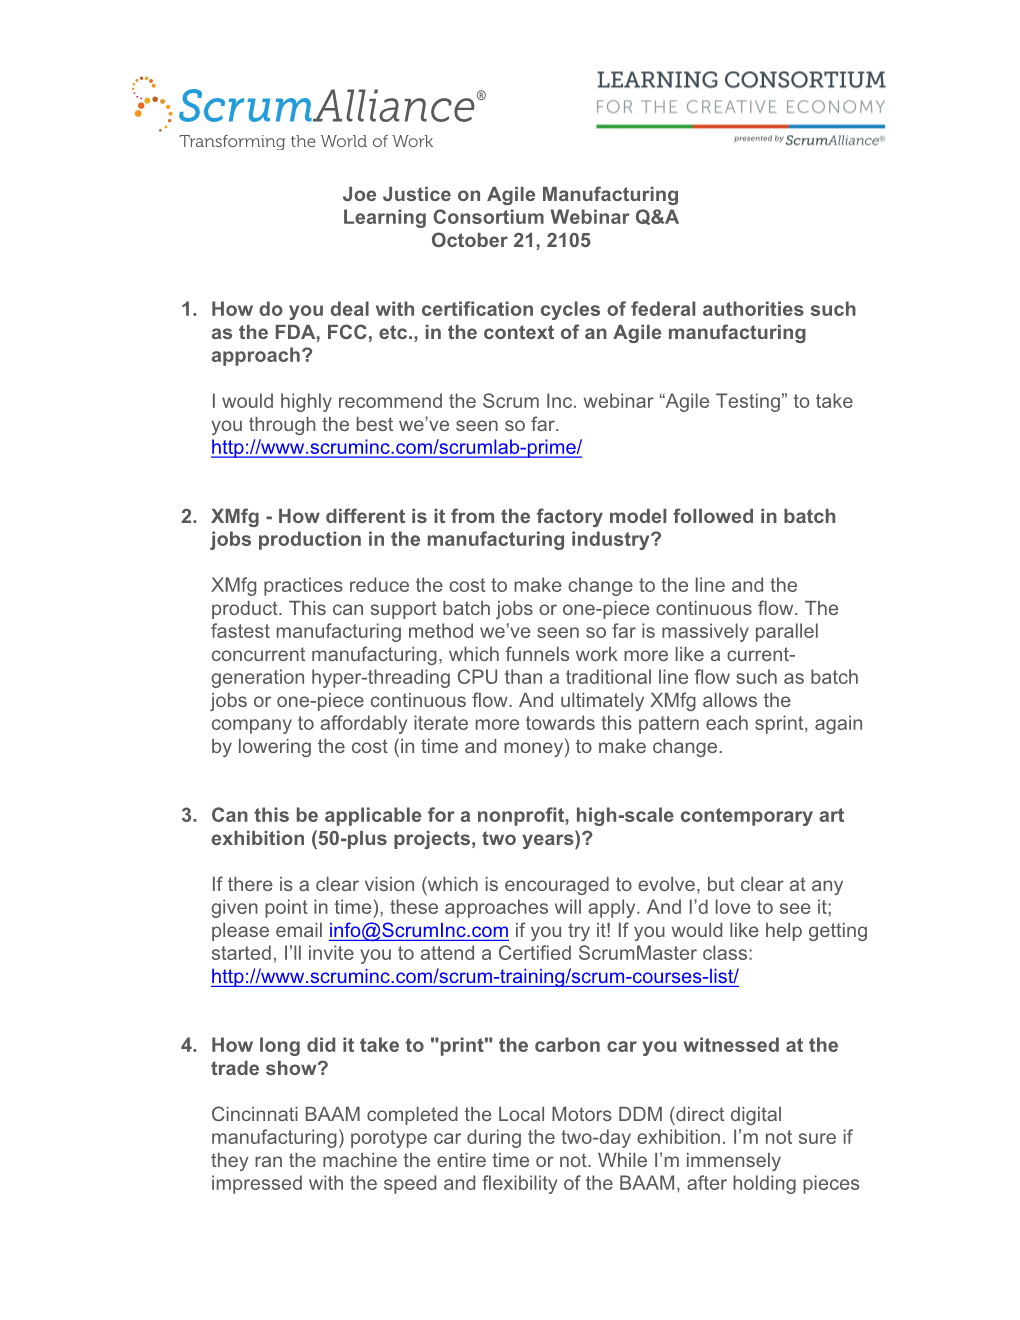 Joe Justice on Agile Manufacturing Learning Consortium Webinar Q&A